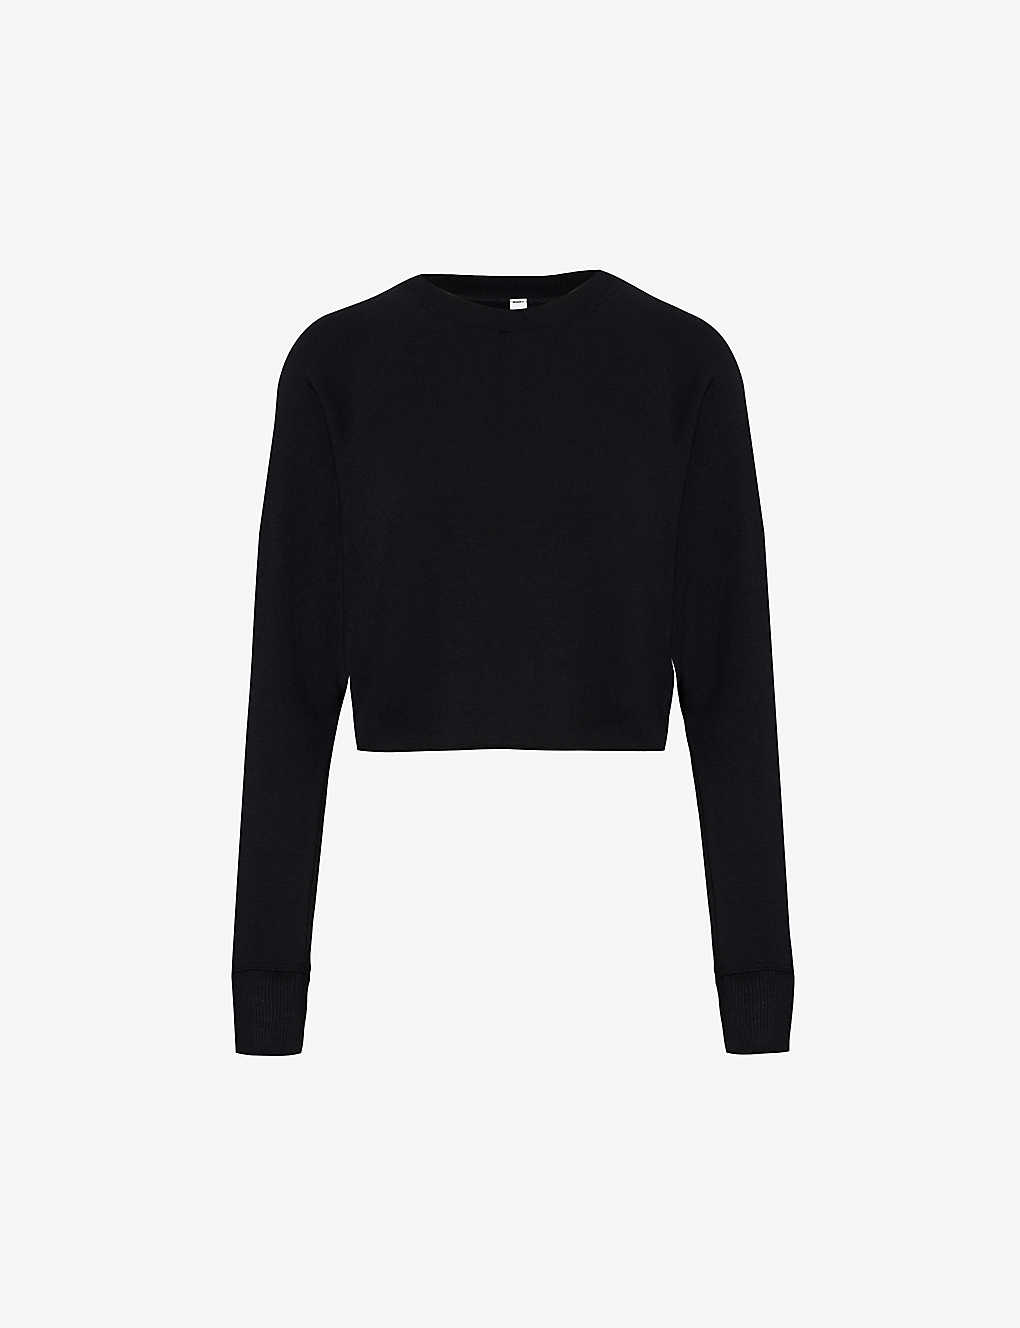 Splits59 Womens Black Warm Up Relaxed-fit Stretch-woven Sweatshirt